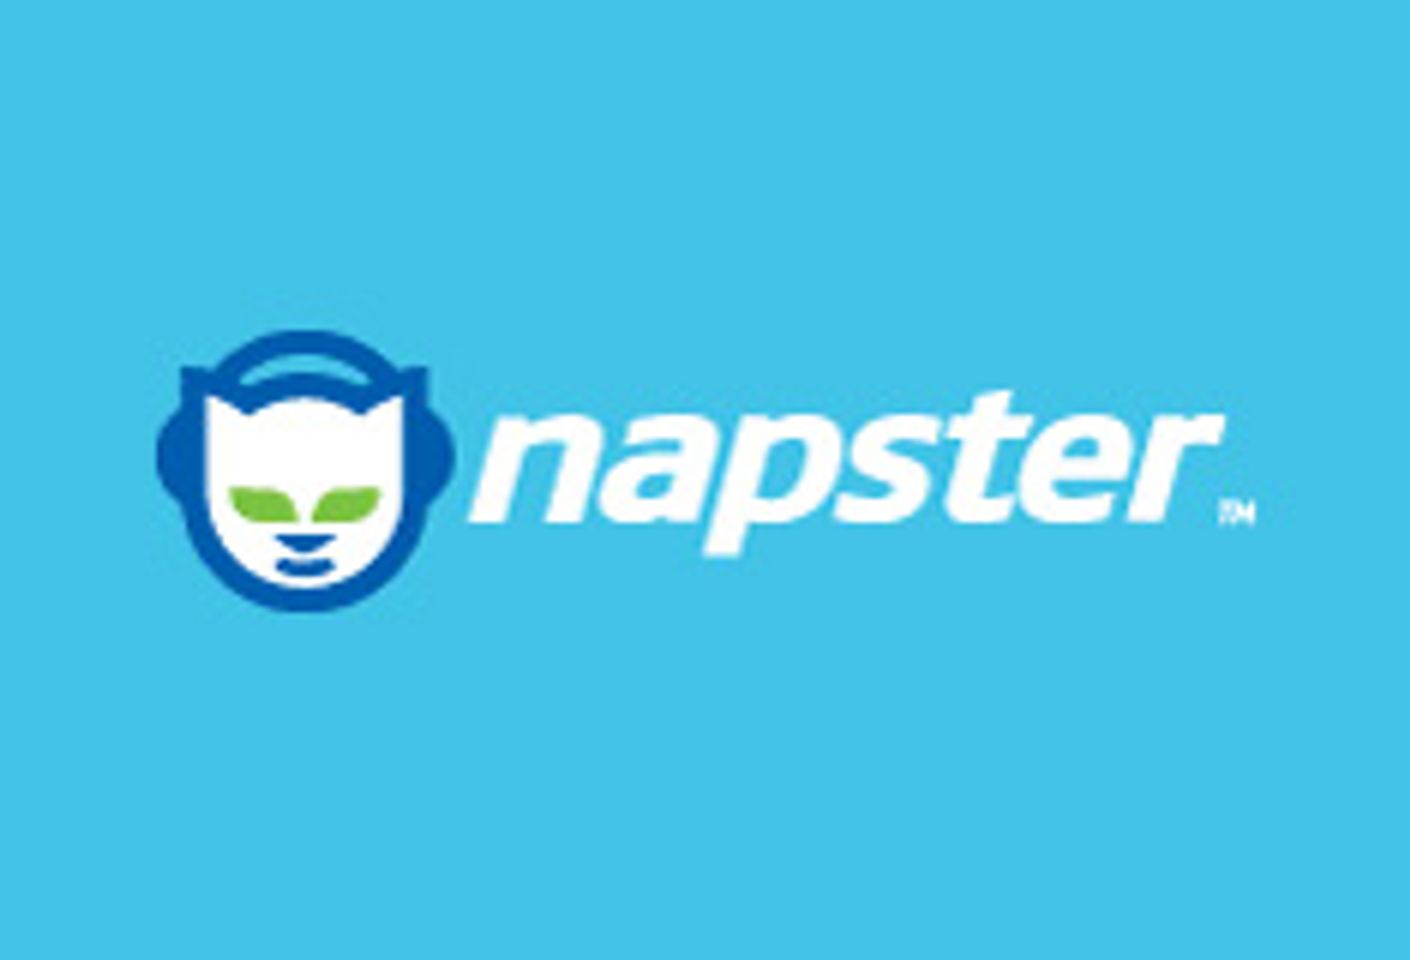 Napster Infringement Suit Squashed